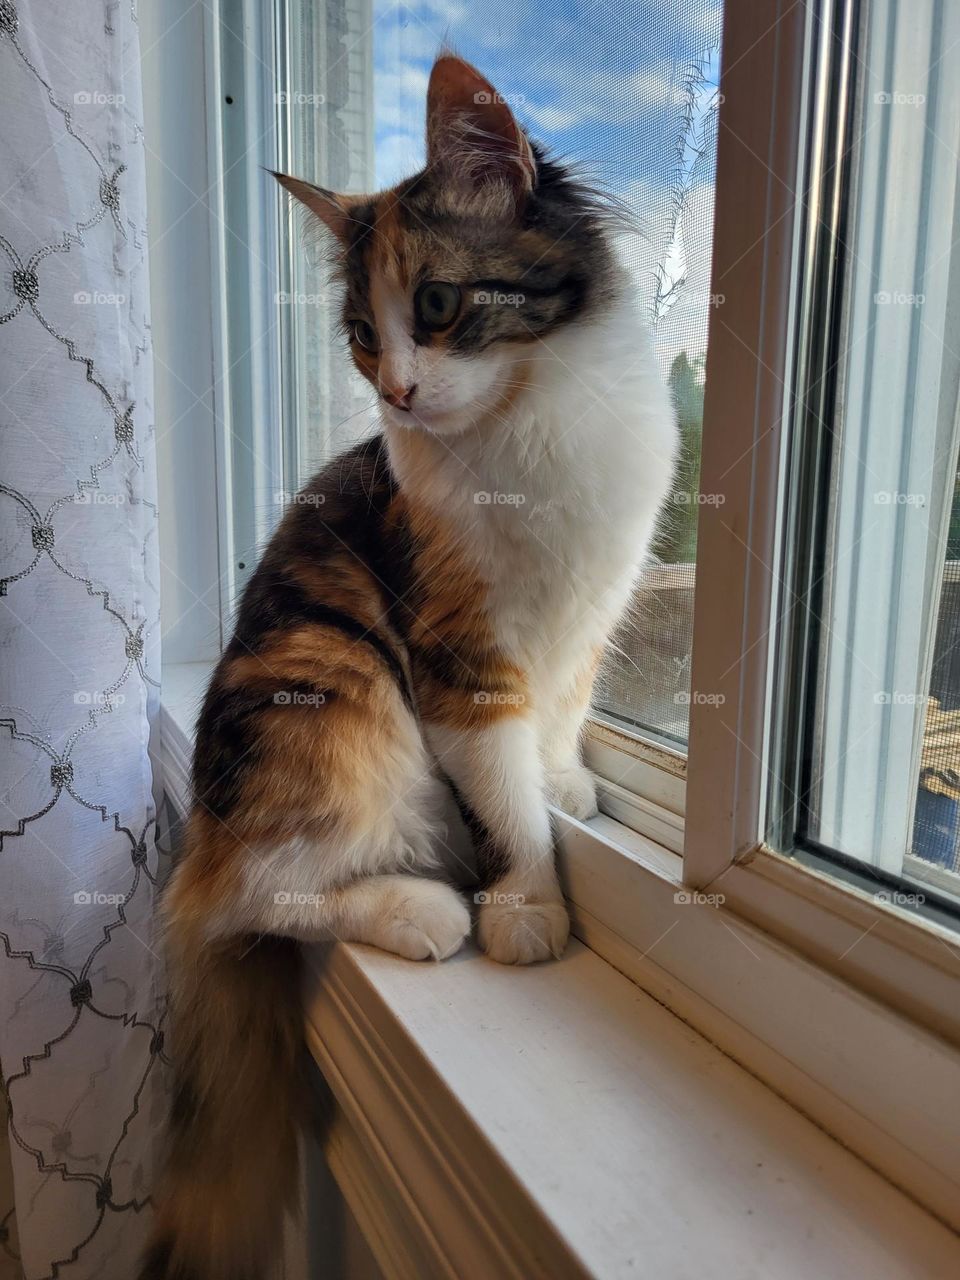 Calico cat sitting on window sill